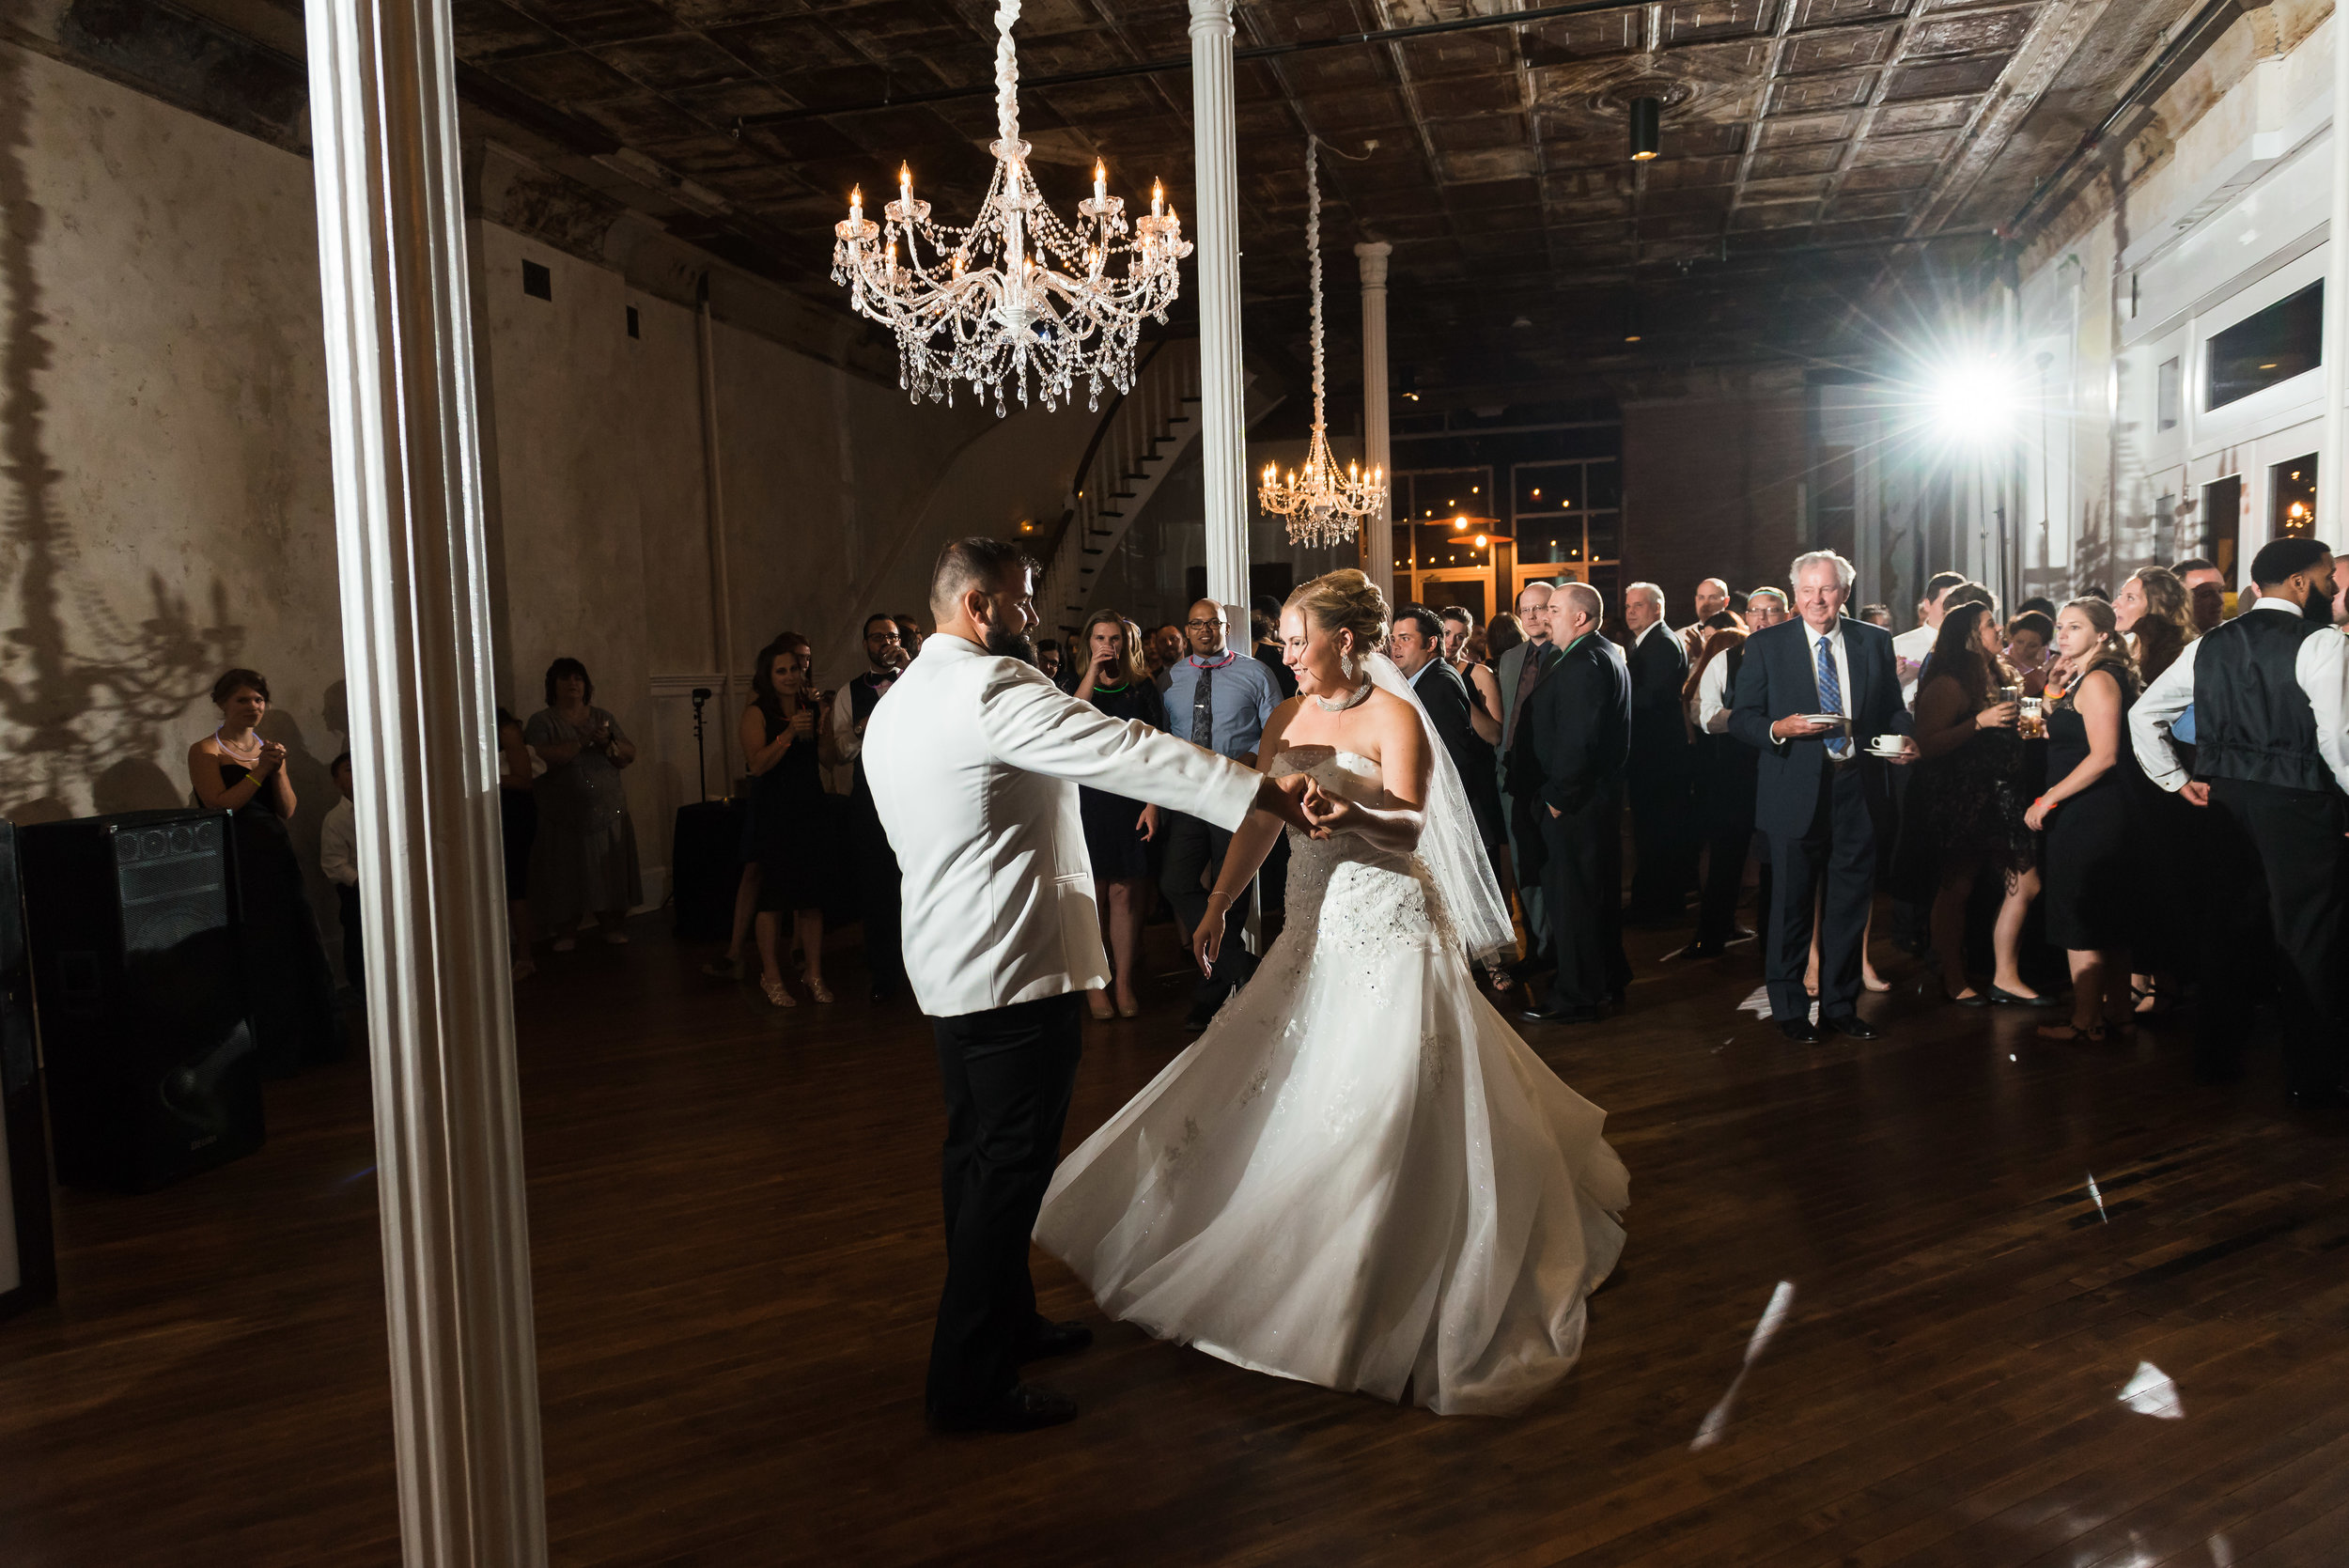 Bride and groom dancing in Grand Salon chandelier